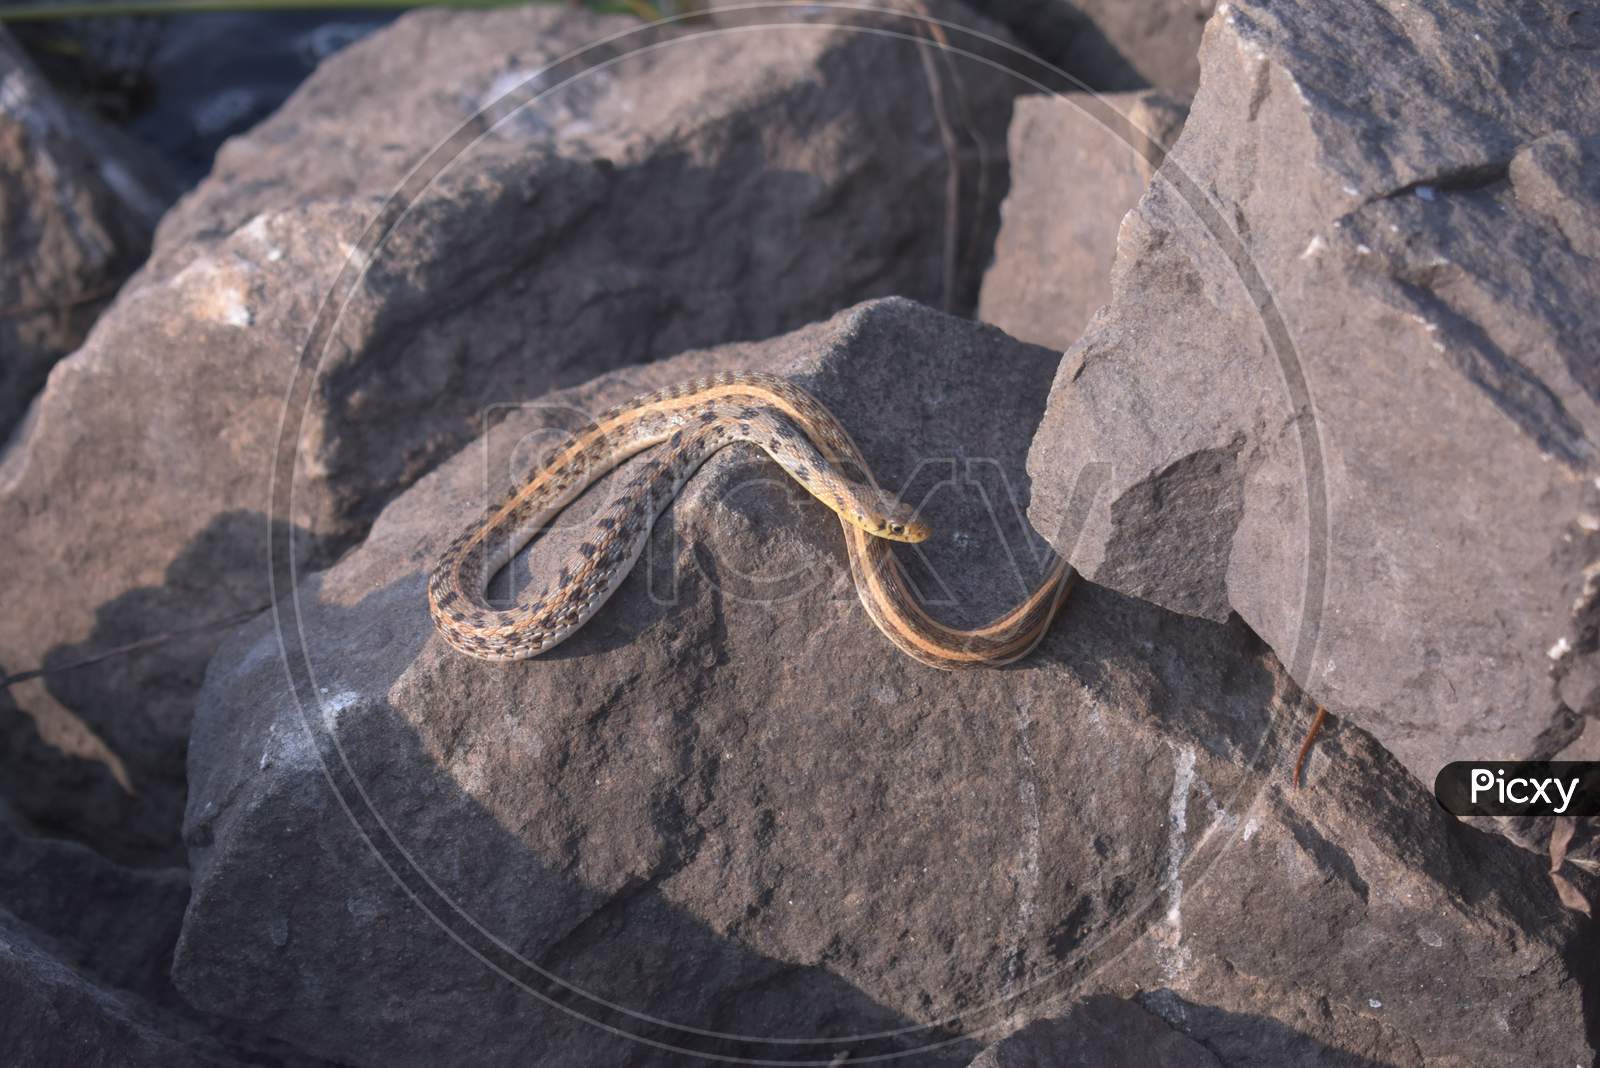 A Little Baby Snake Taking Sunbath On Top Of The Rocks